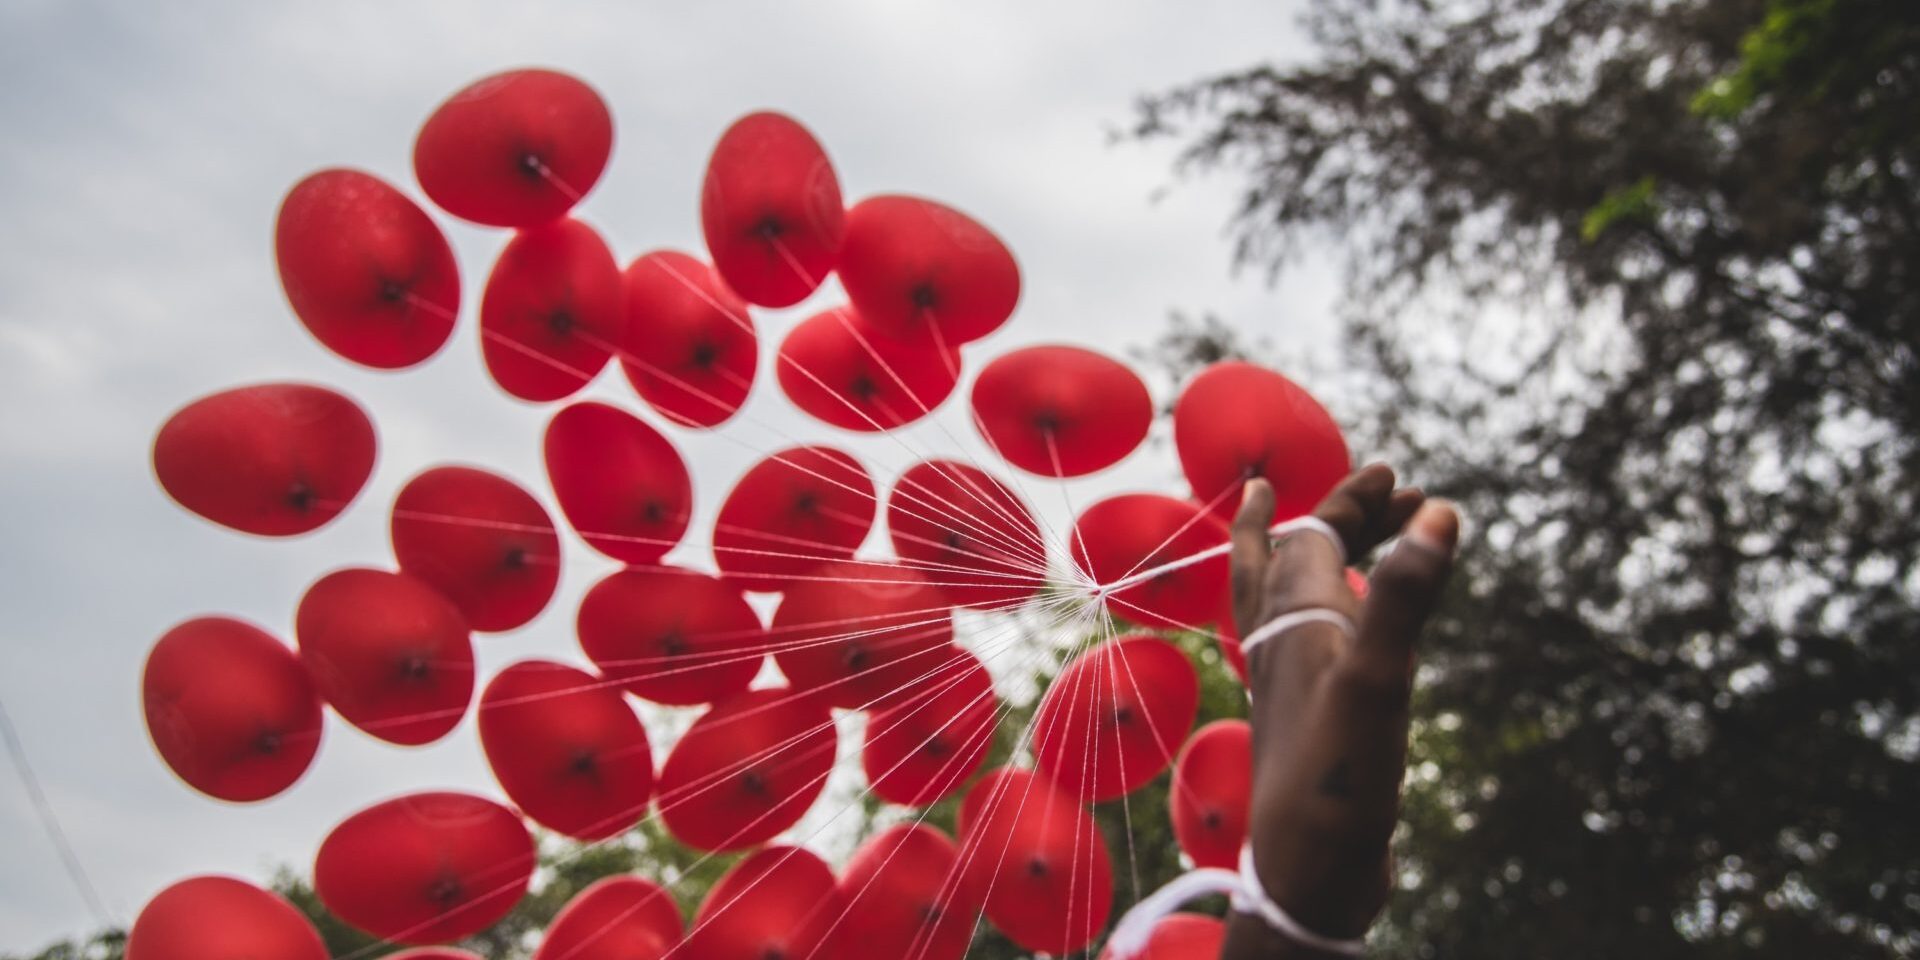 Hand holding red balloons - Birmingham Children's Hospital Charity partnership announcement